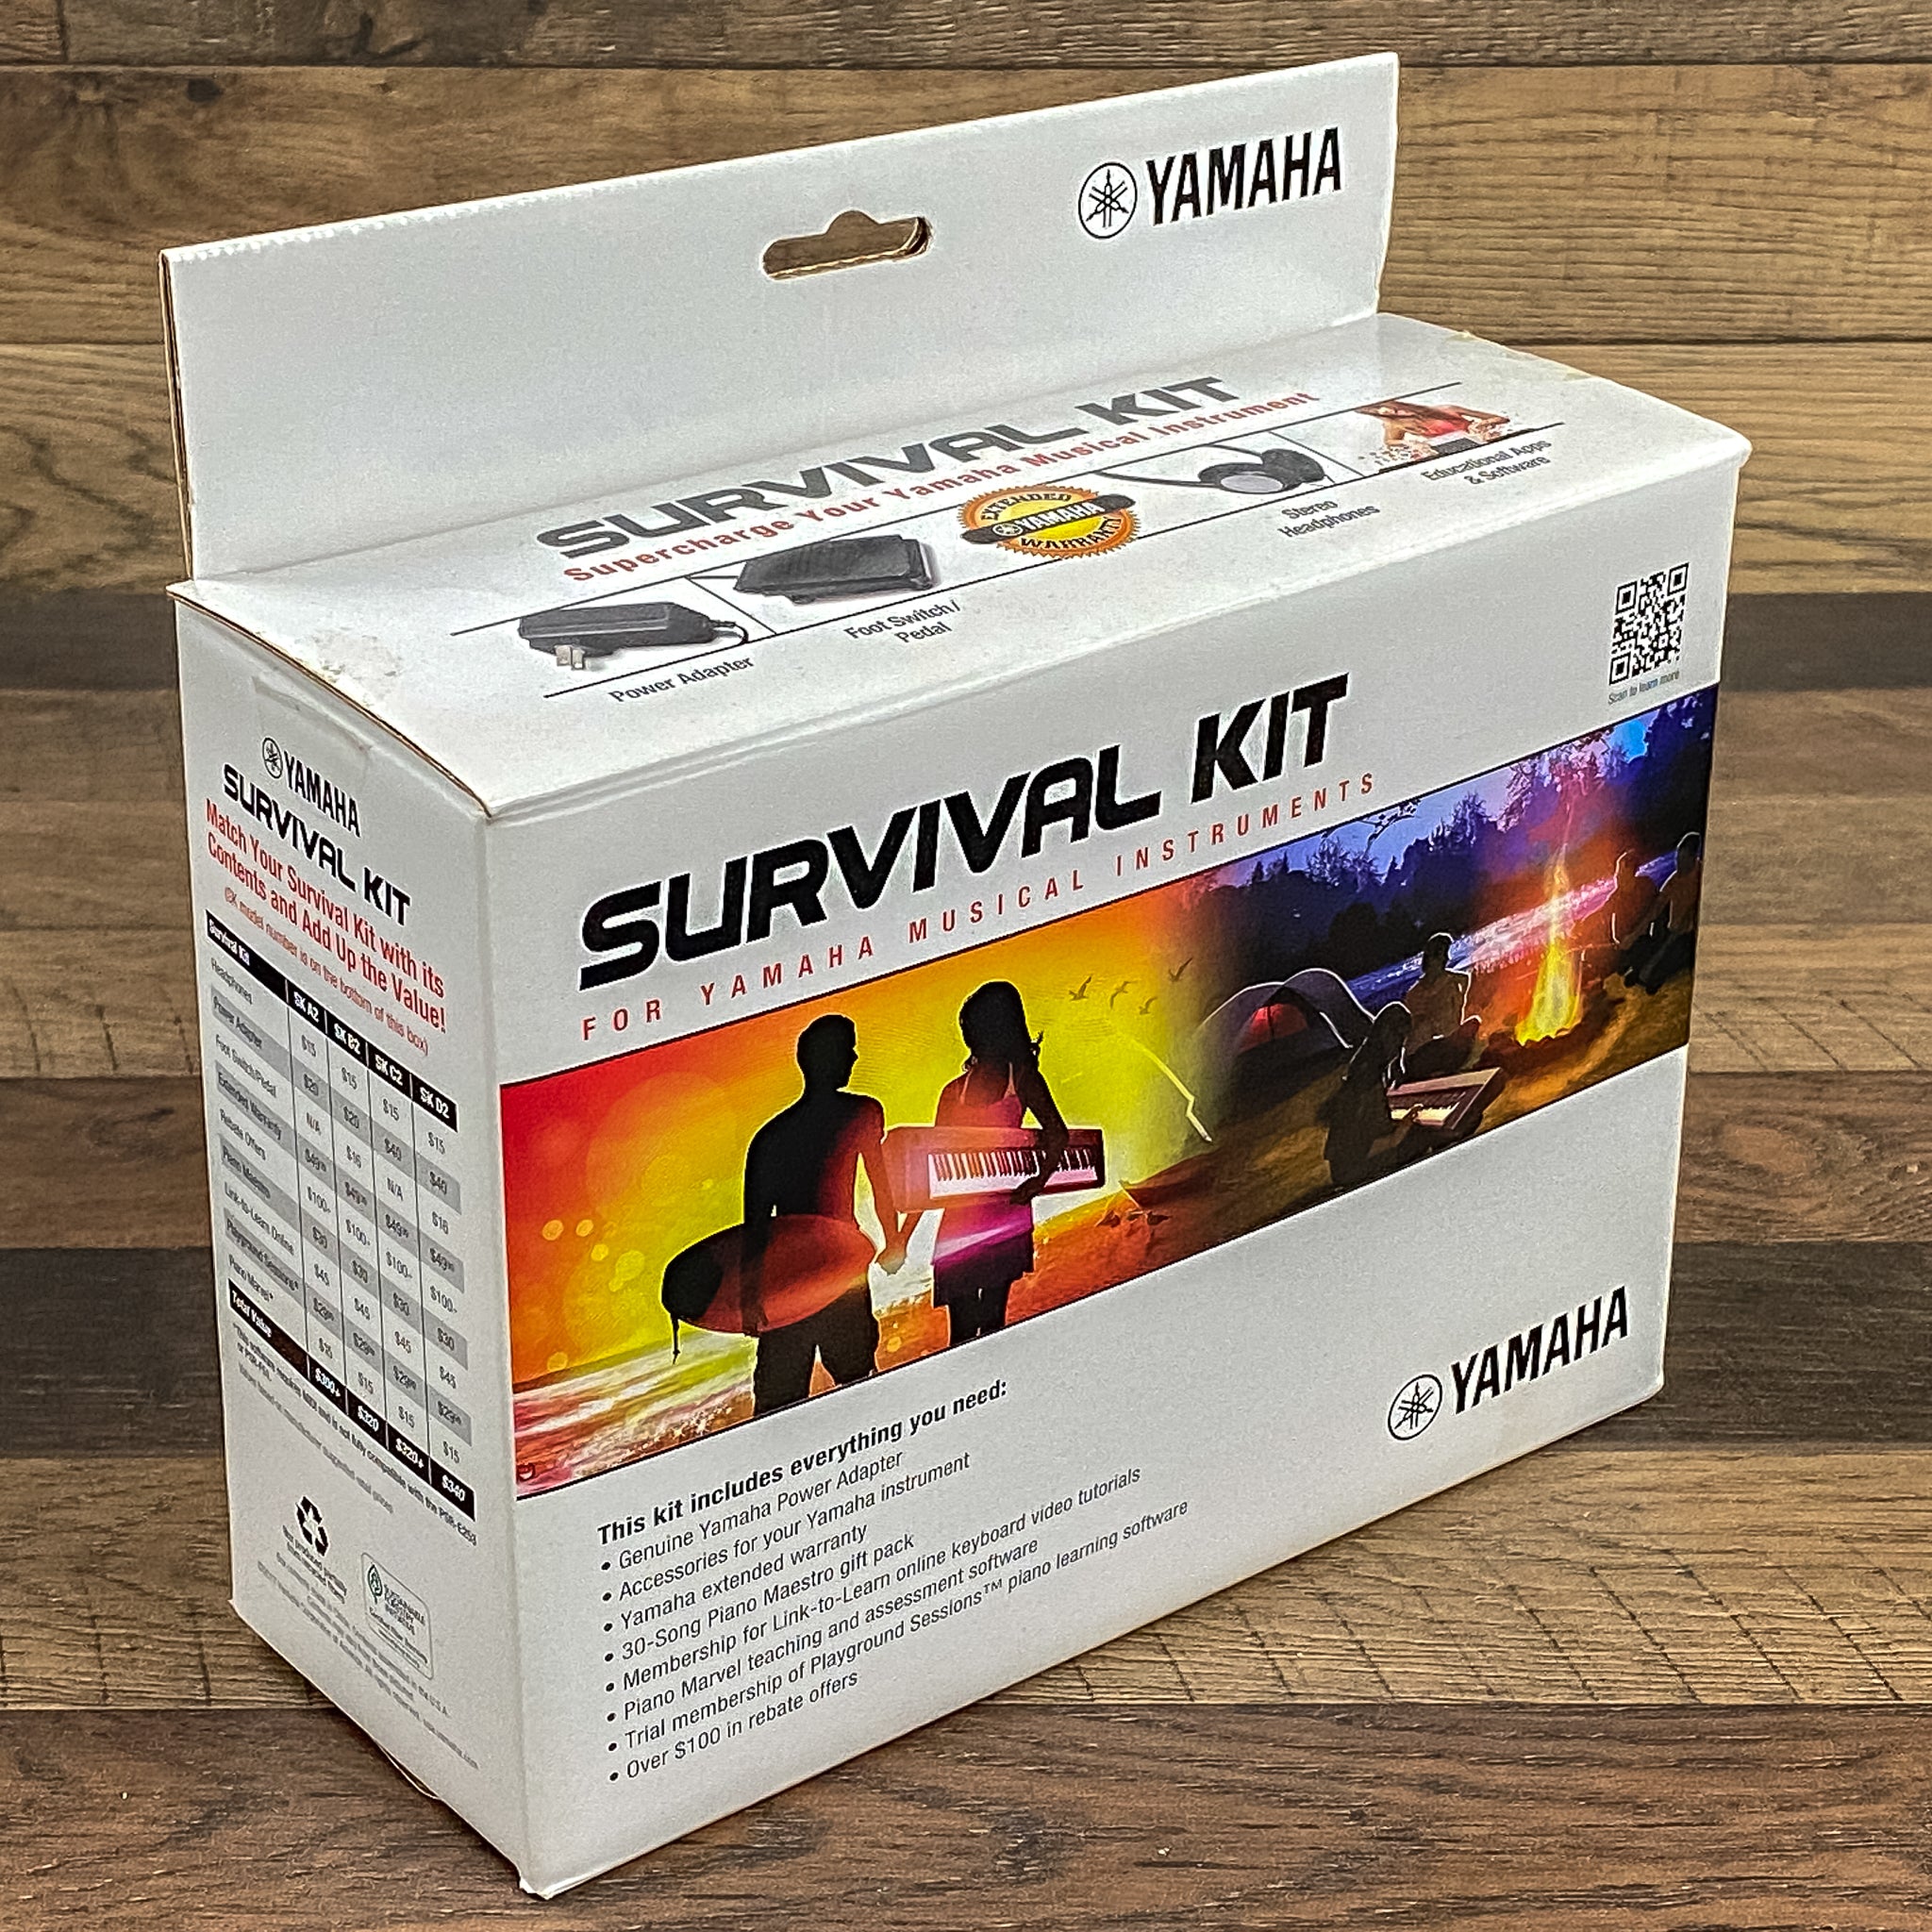 Yamaha Survival Kit SK-B2 New Old Stock Has PA-130 Adapter, Headphones & Pedal